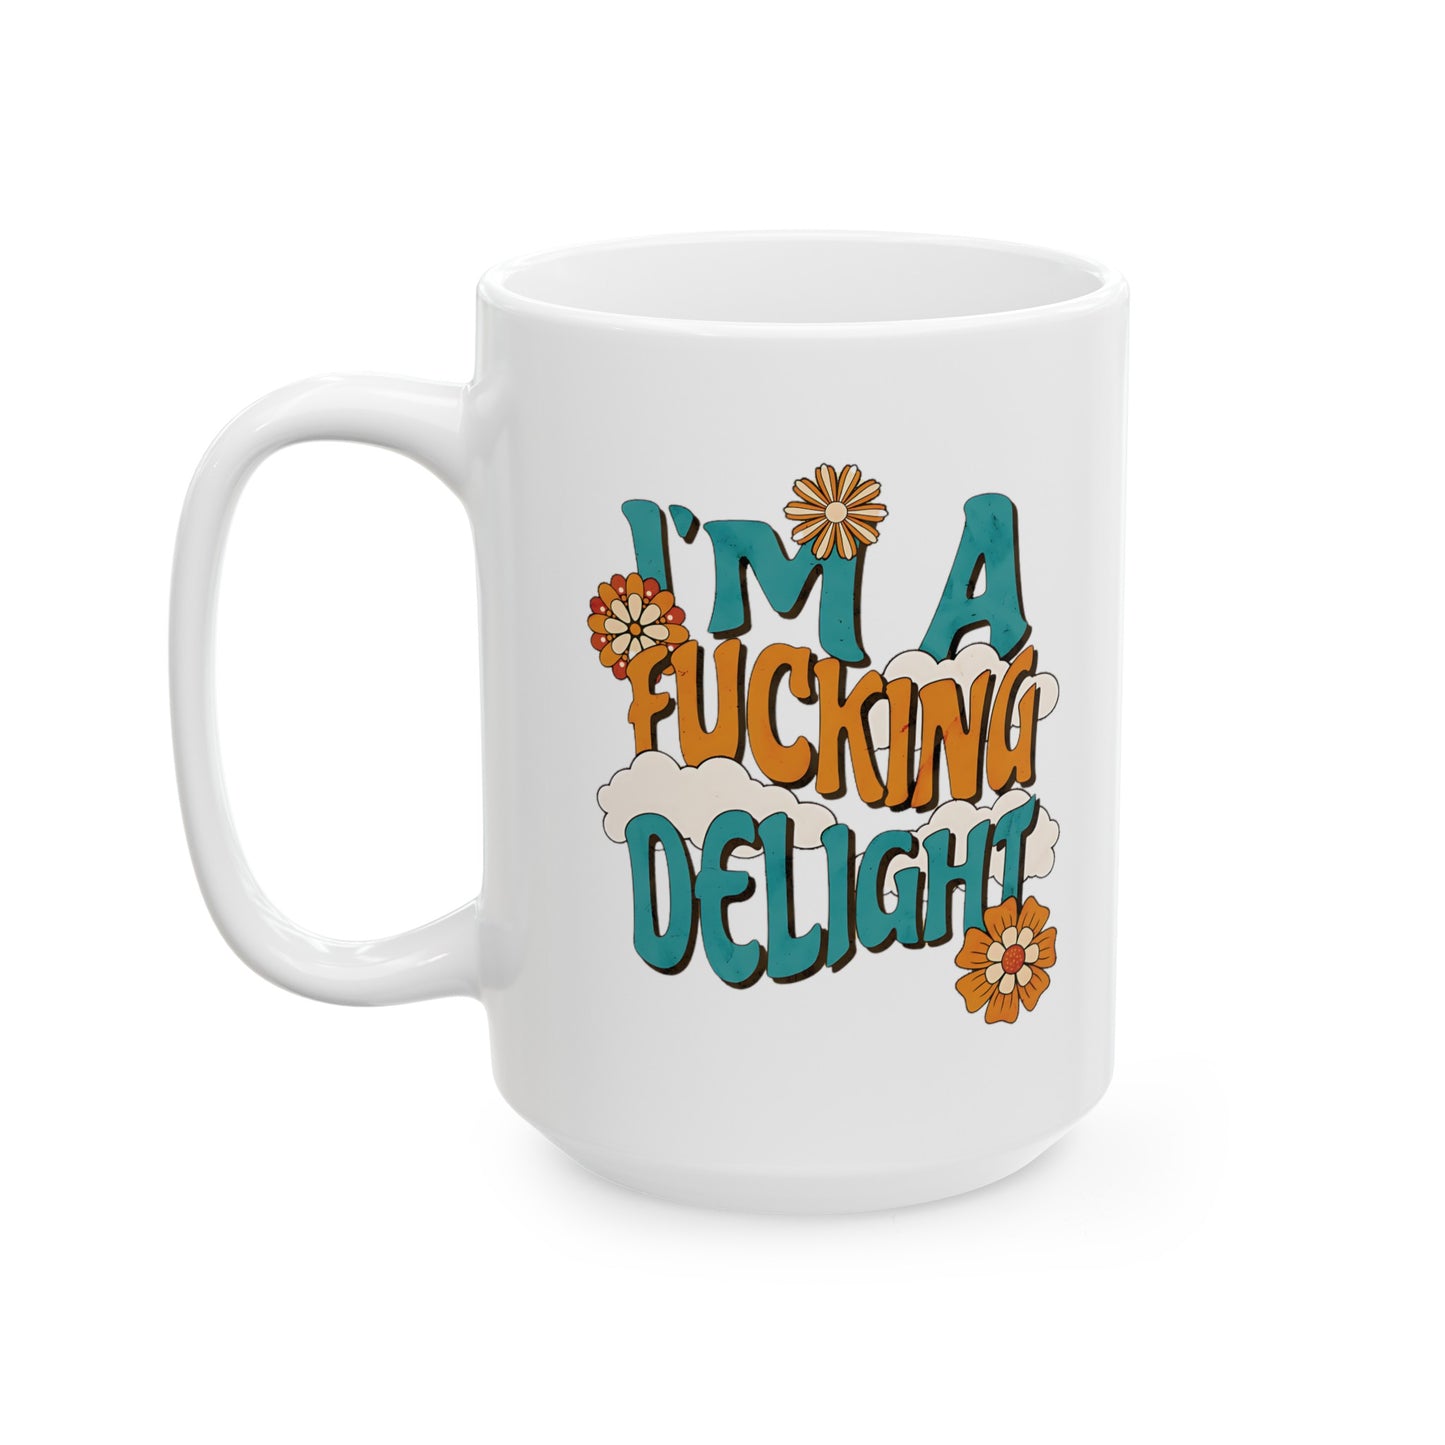 I'm a Fucking Delight Mug